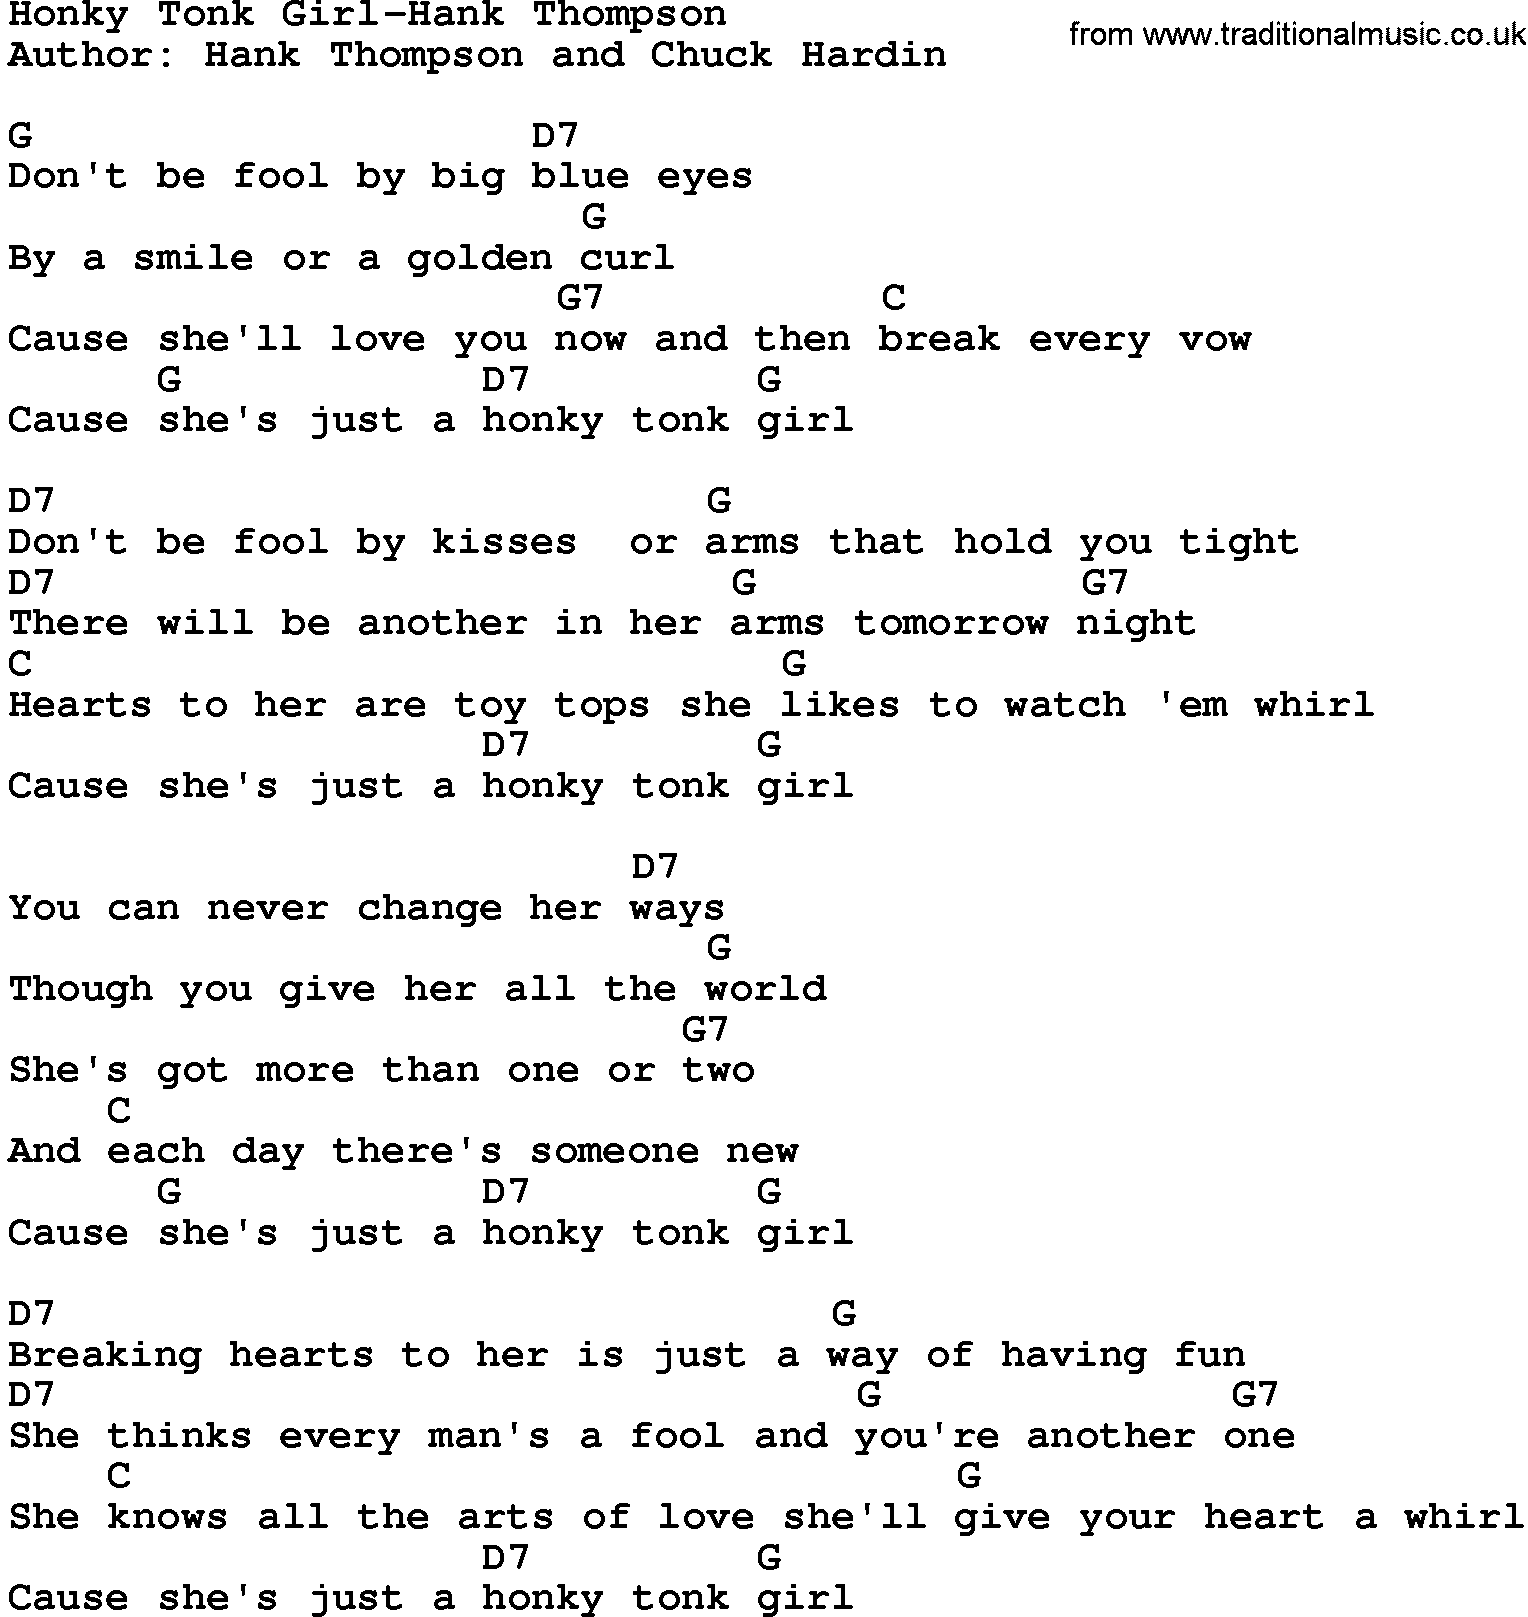 Country music song: Honky Tonk Girl-Hank Thompson lyrics and chords